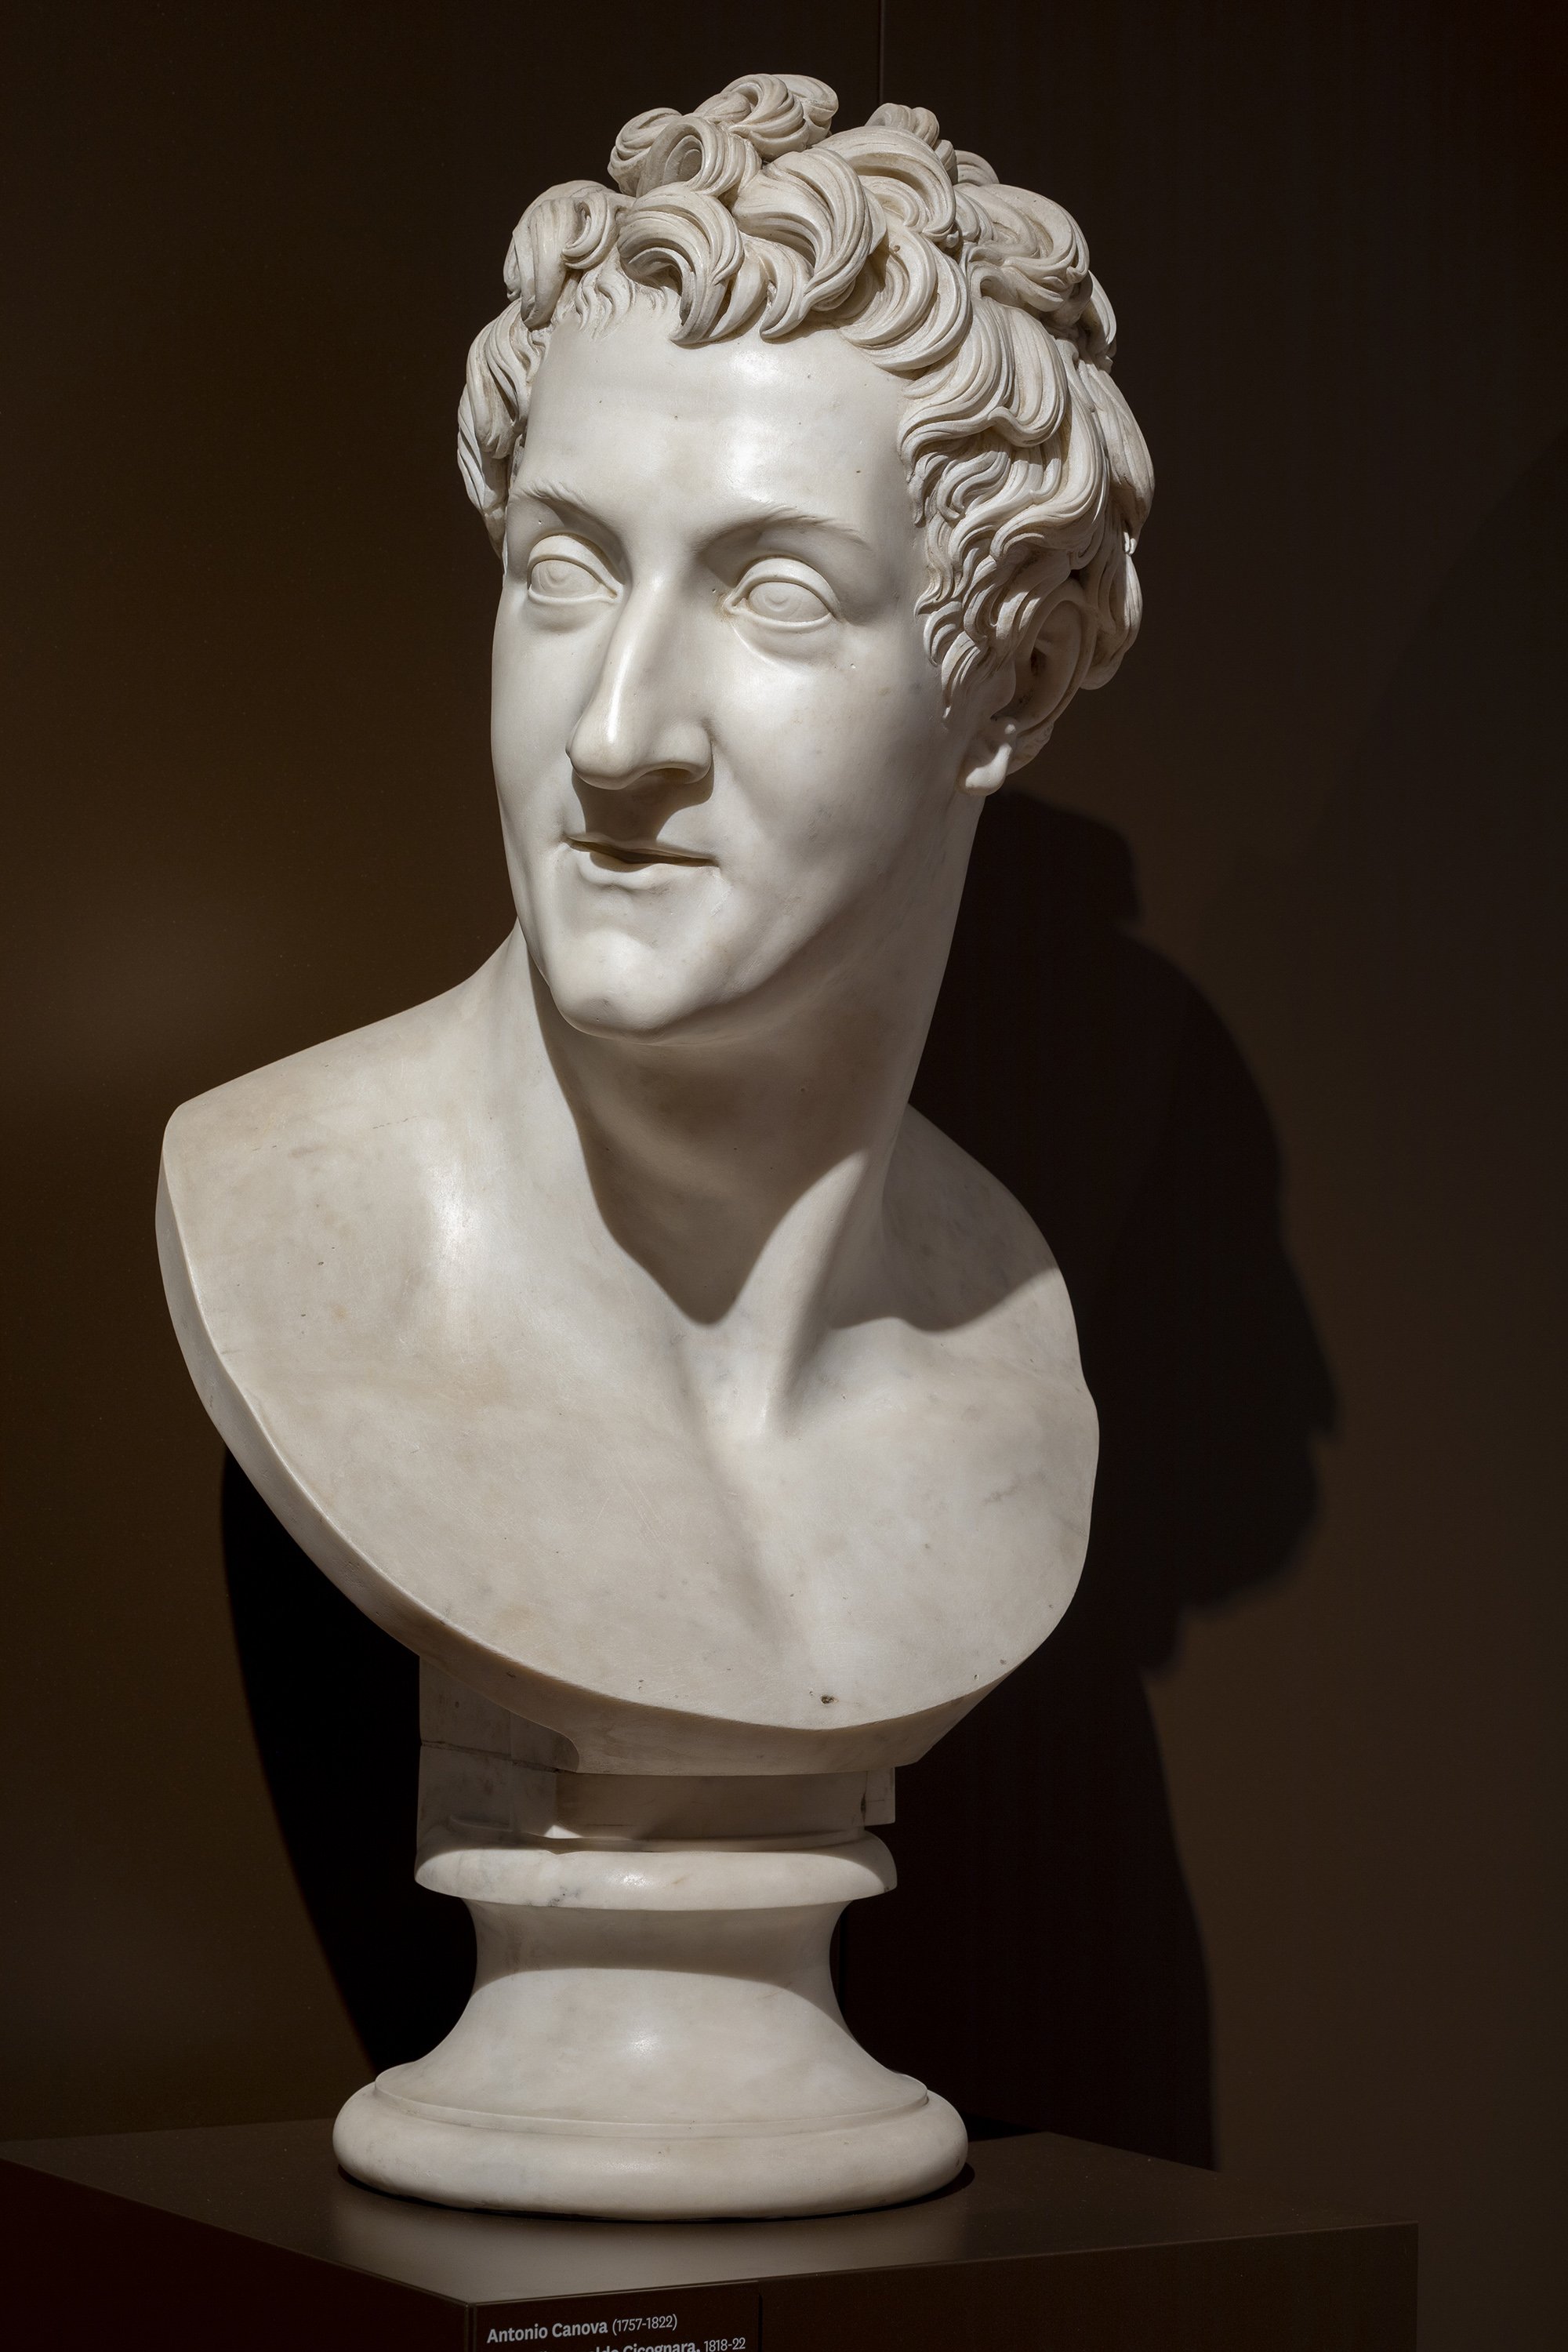 MS066 - Antonio Canova, Busto di Leopoldo Cicognara, 1818-1822, marmo (Sala 11) (1).jpg